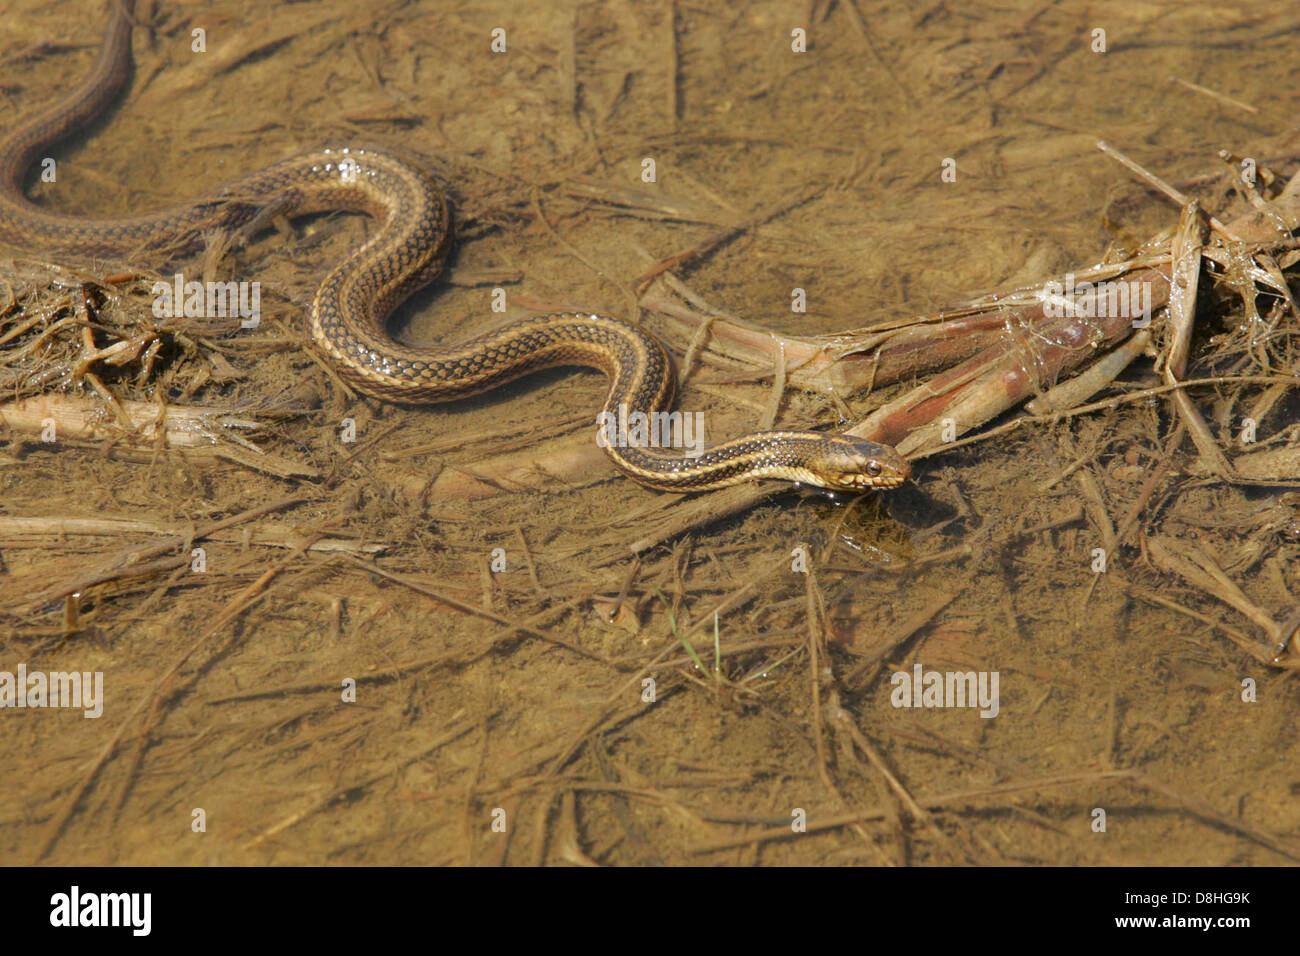 Este Garter Snake repta por una zona fangosa. Foto de stock